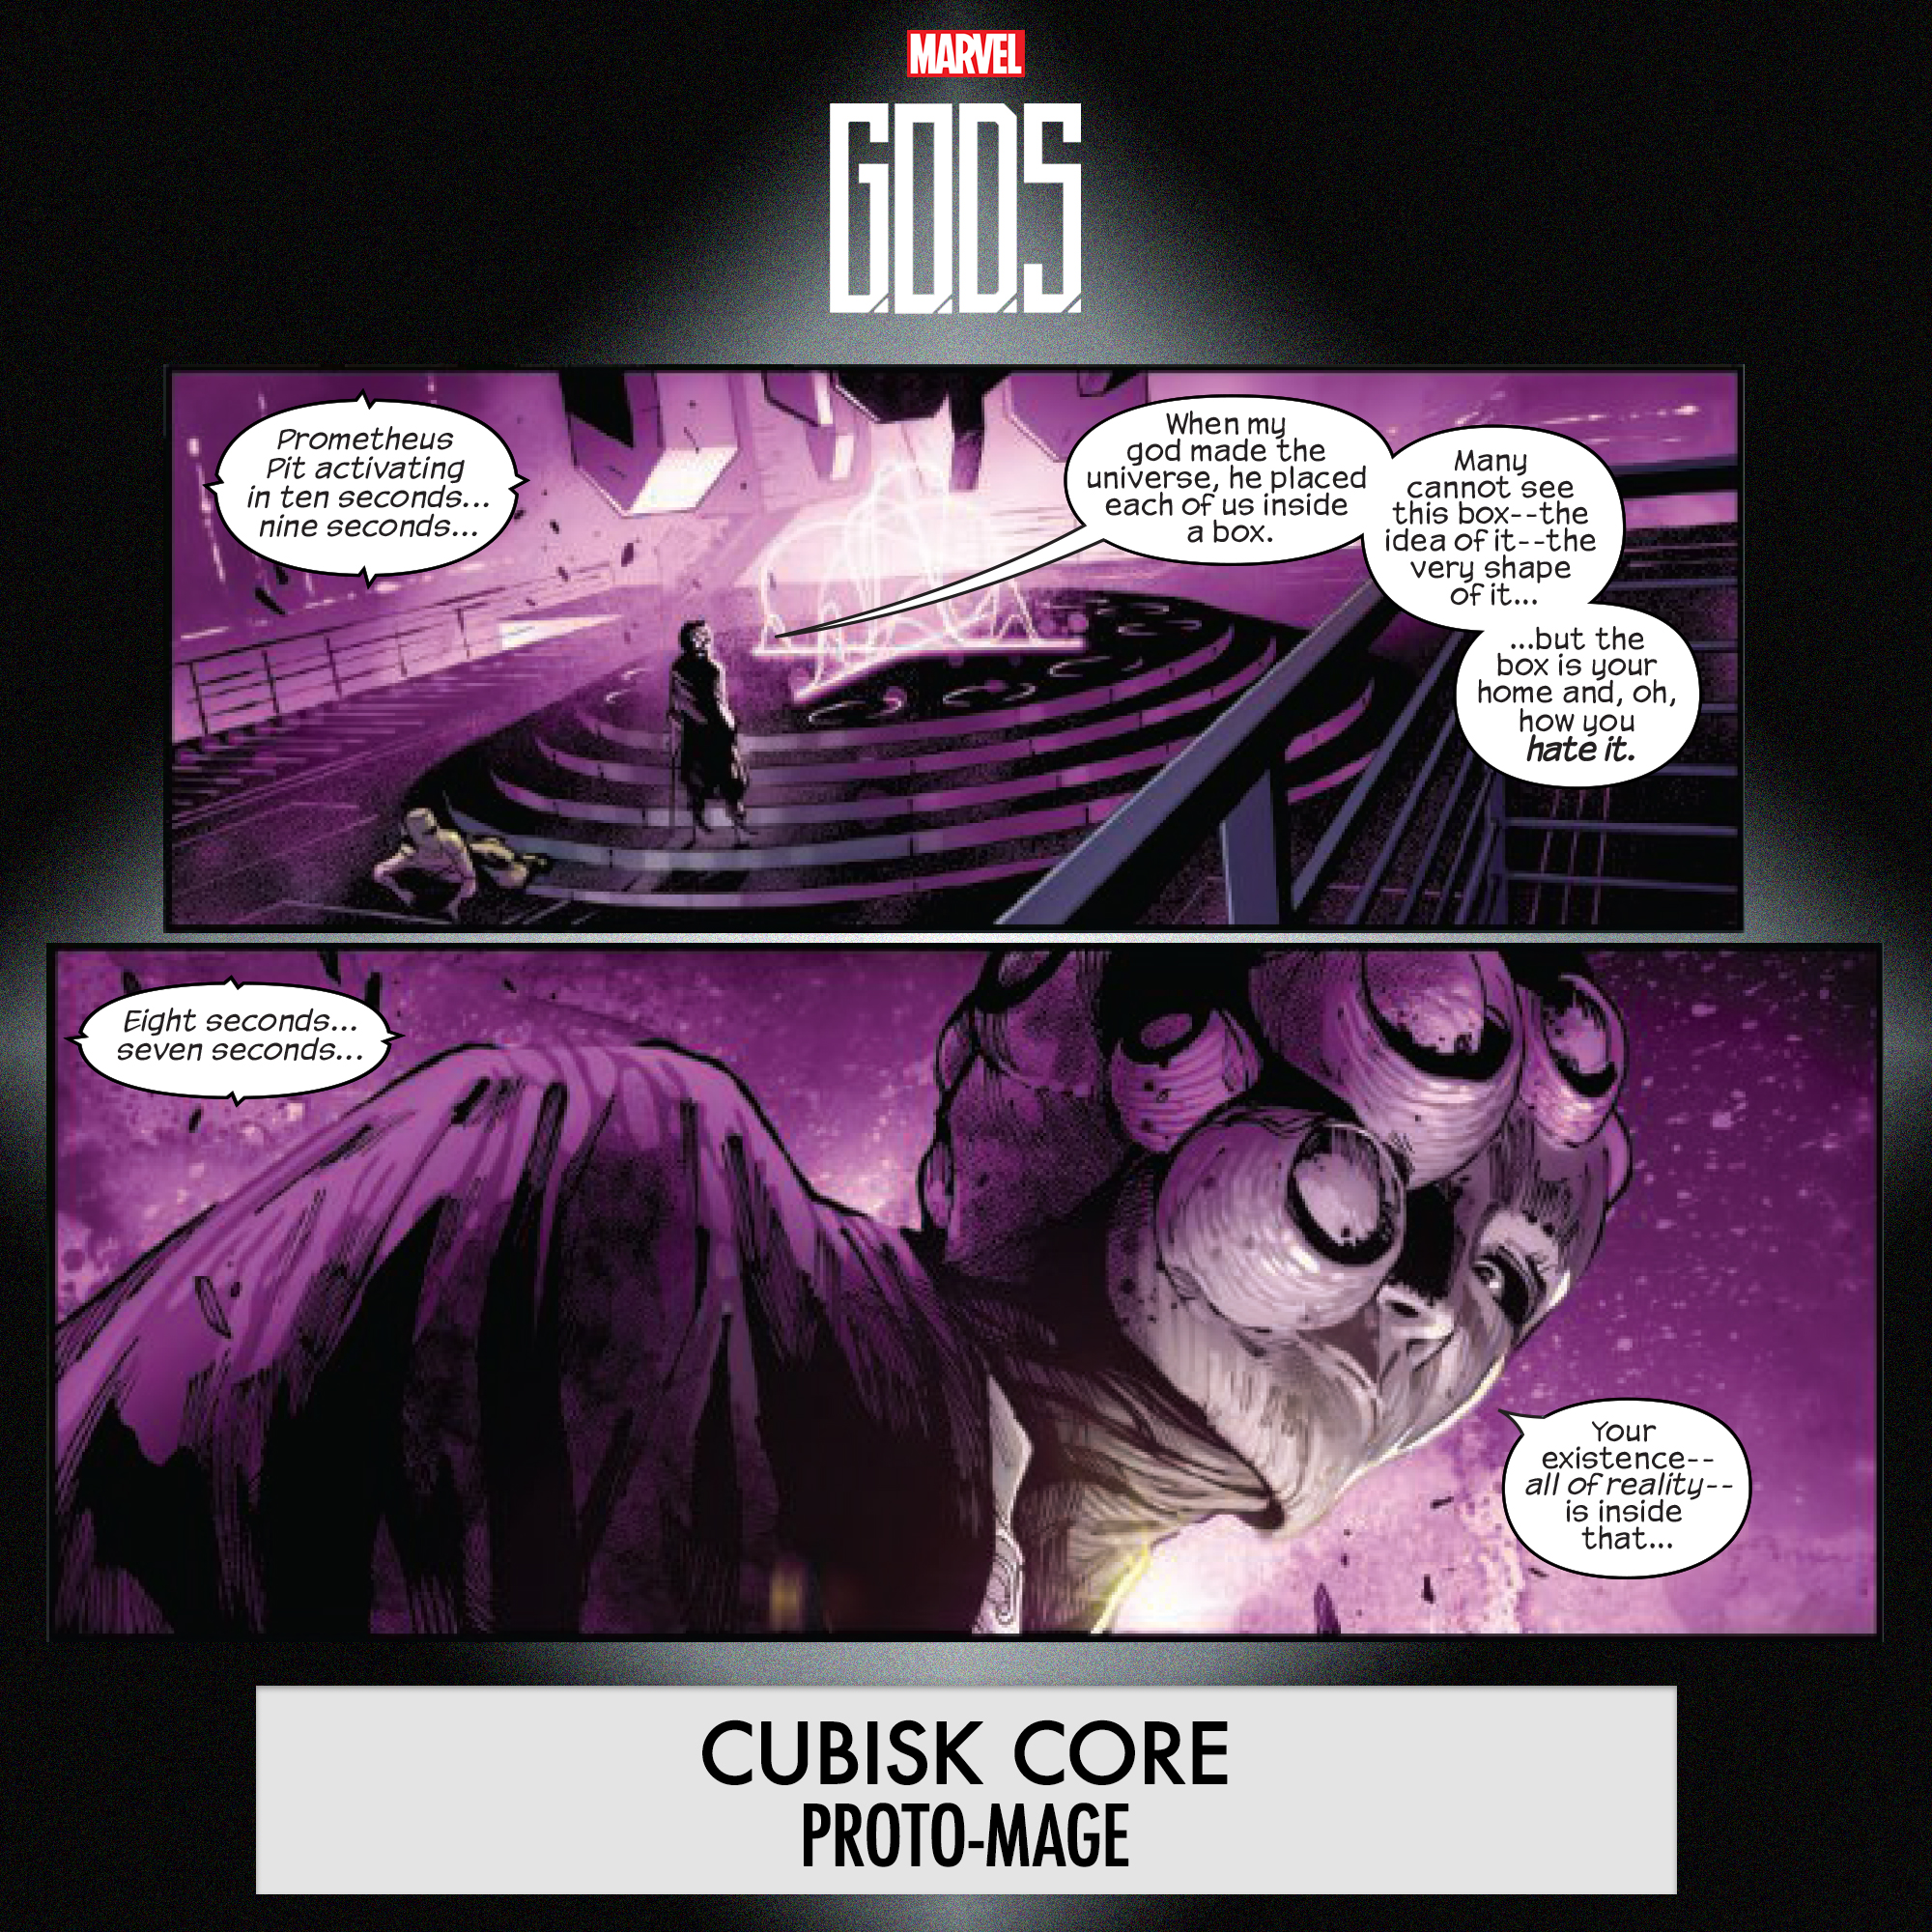 Marvel Comics' Pantheon of gods